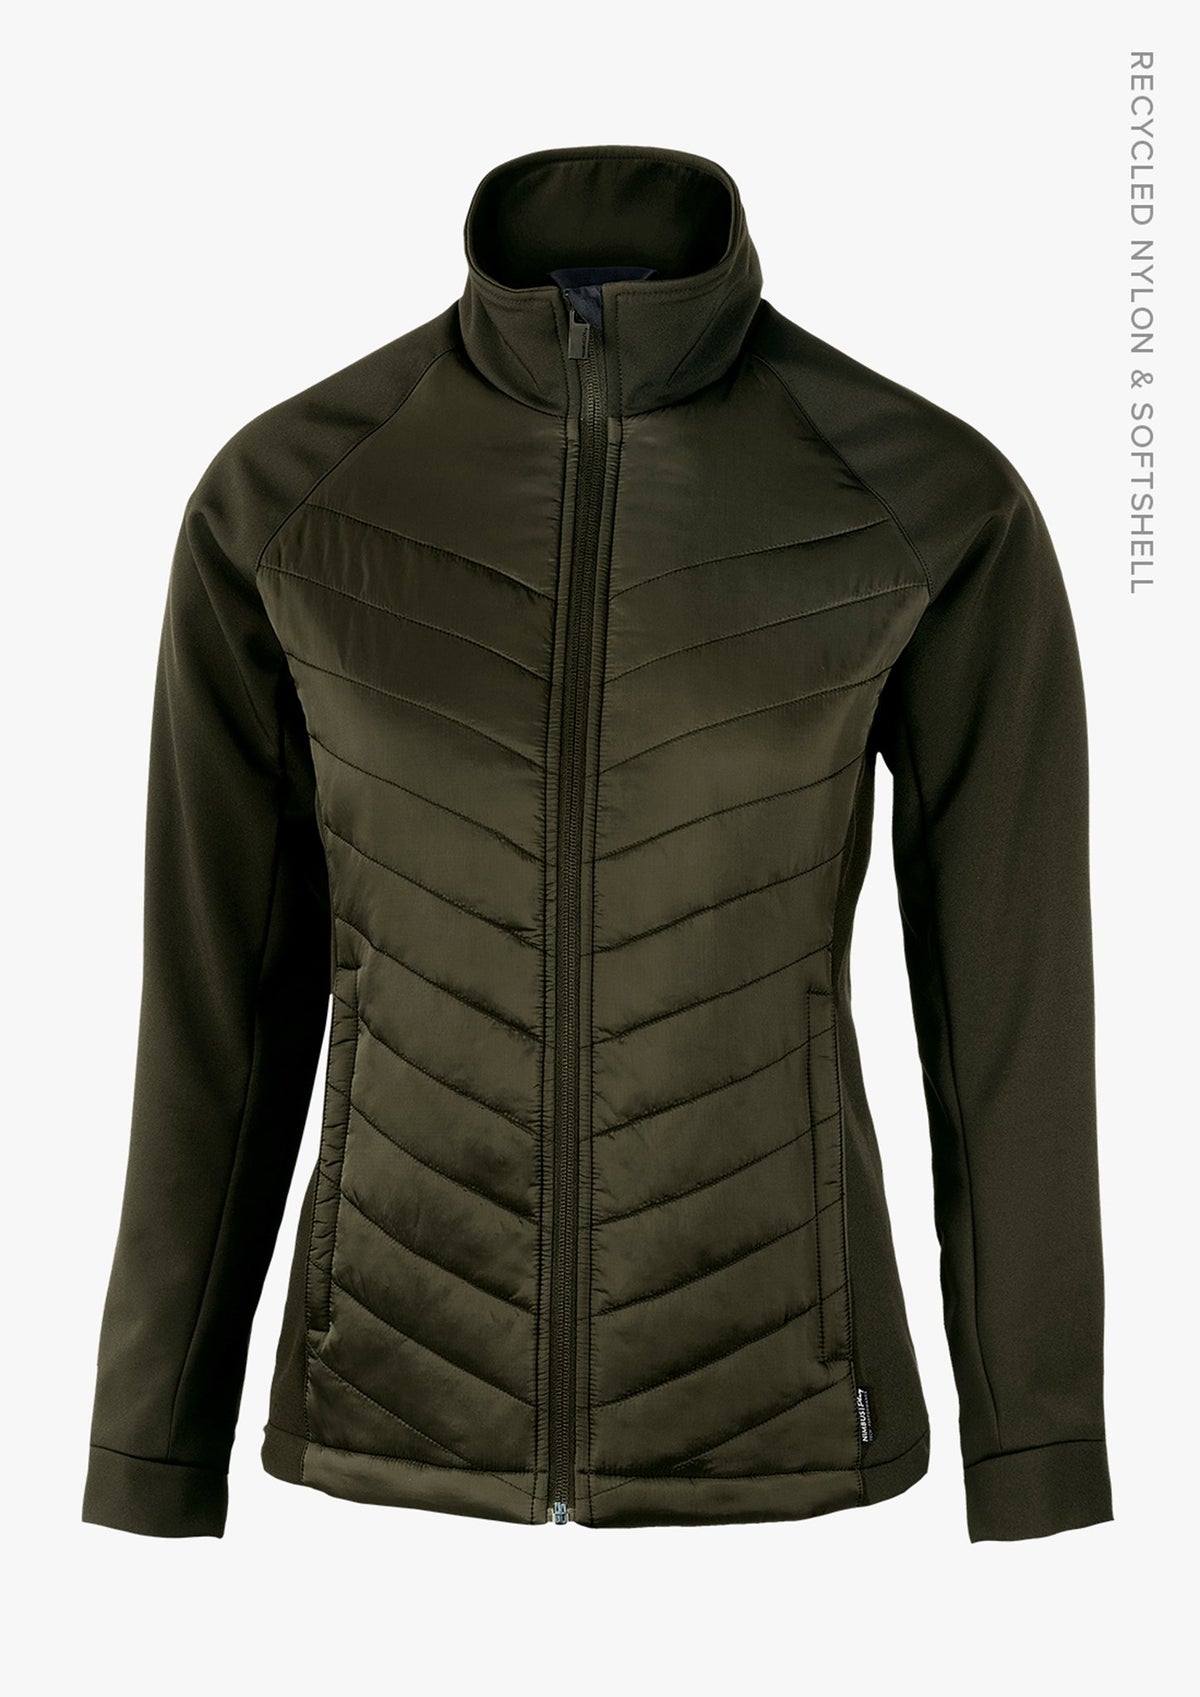 Jackets & coats | Premium corporate fashion | Nimbus